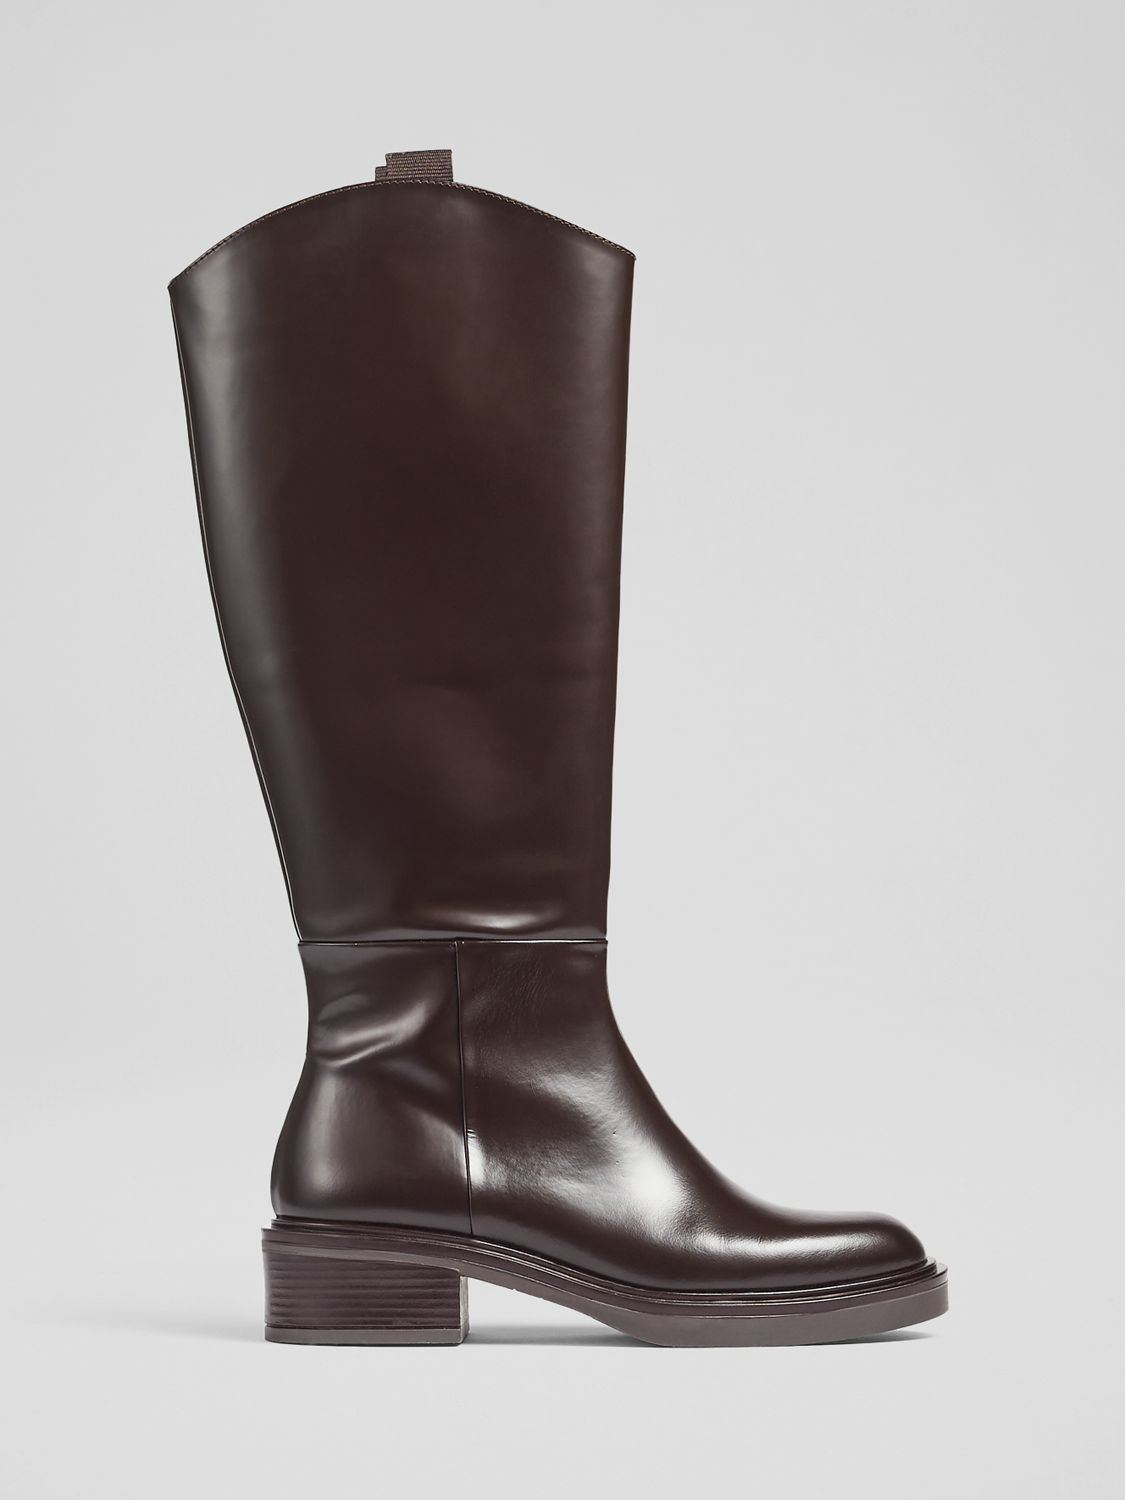 L.K.Bennett Lauren Leather Knee High Boots, Chocolate, 3